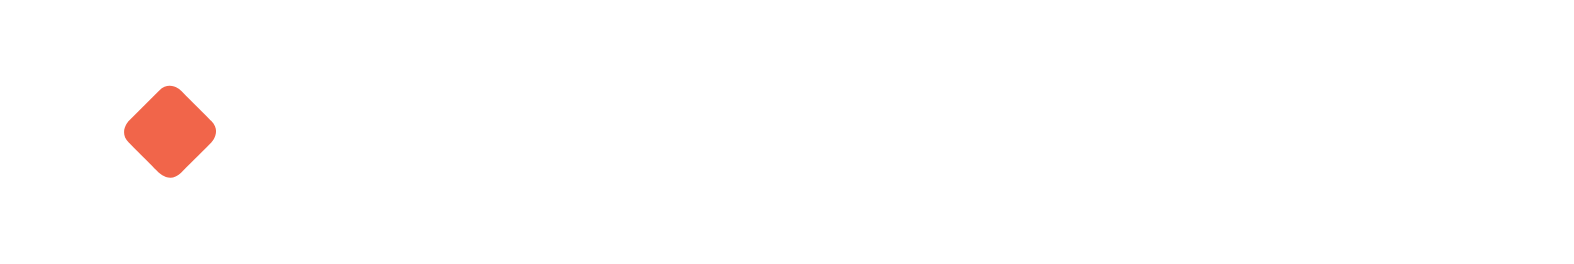 Cimpress Logo groß für dunkle Hintergründe (transparentes PNG)